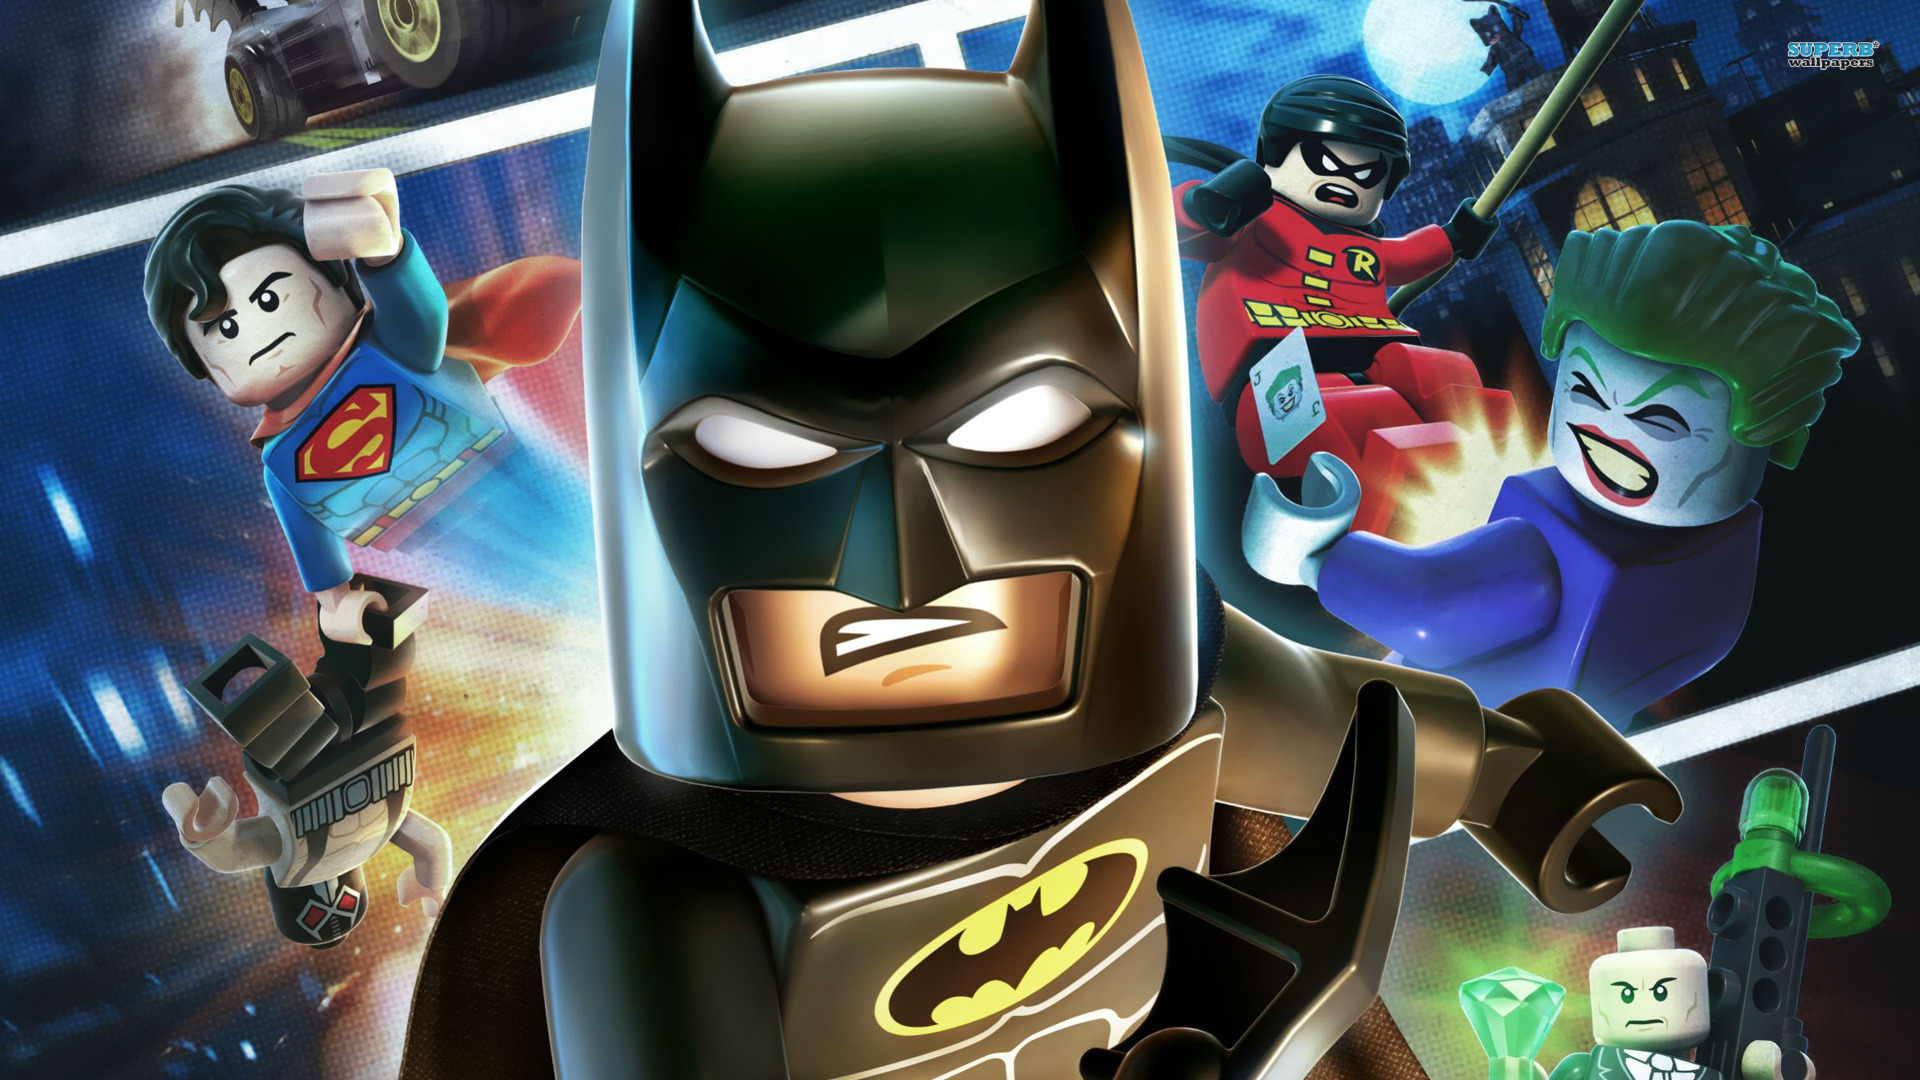 Lego Batman 2 Dc Super Heroes Now On Wii U Launch Trailer Pure Nintendo